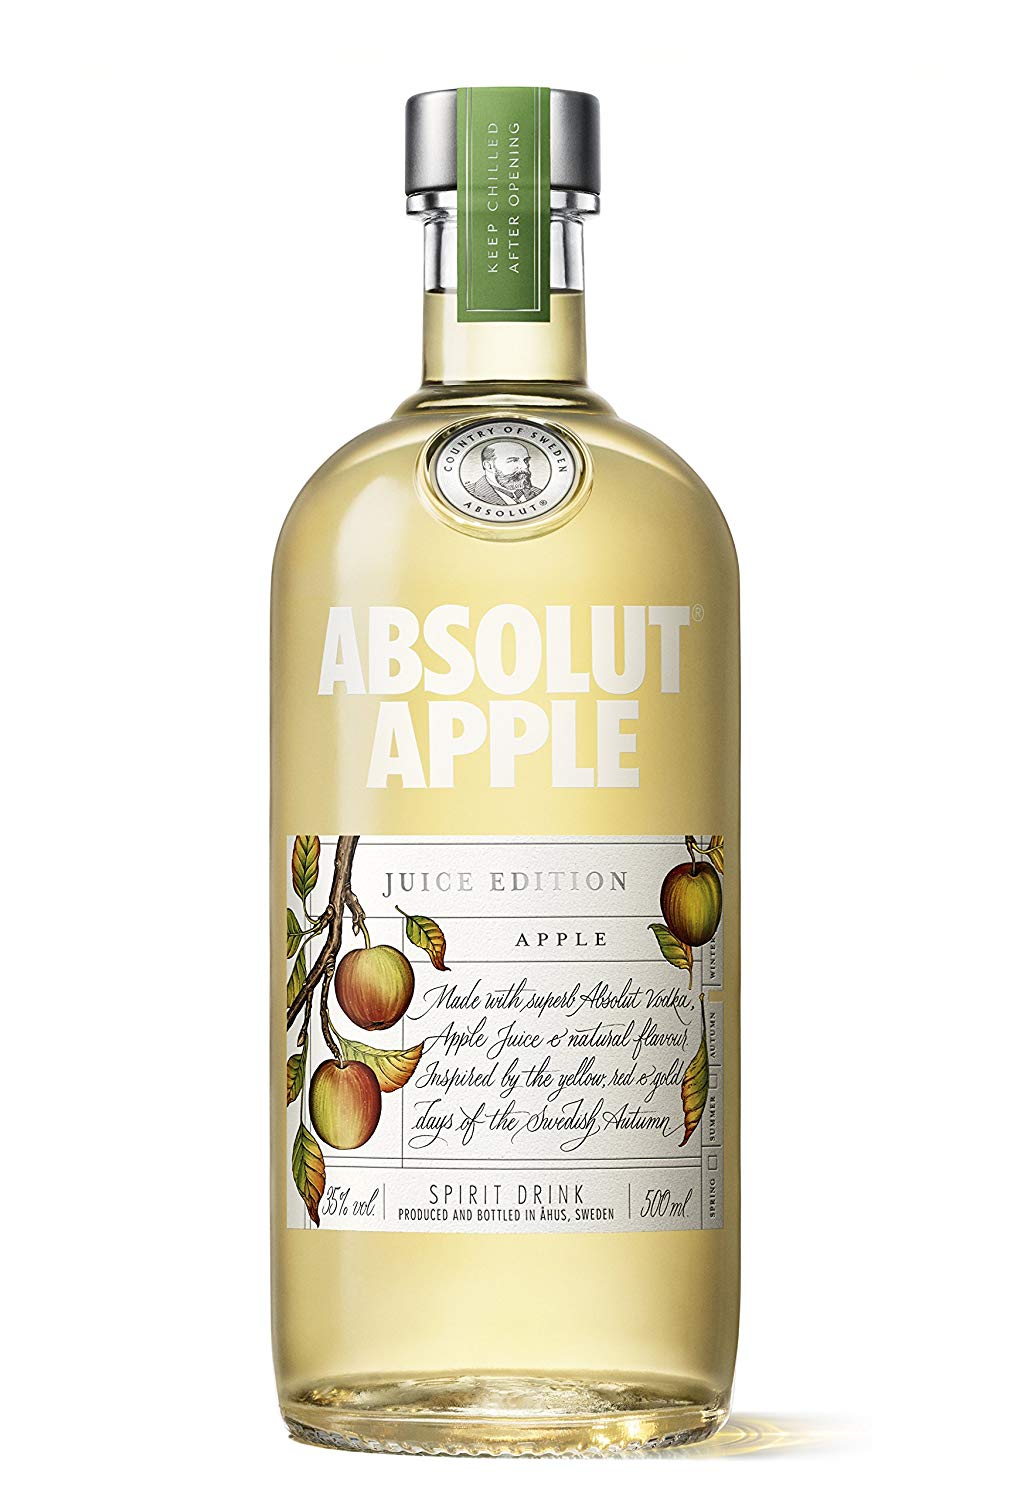 BUY] Absolut Juice Apple Edition Vodka (RECOMMENDED) at Cask Cartel –  CaskCartel.com